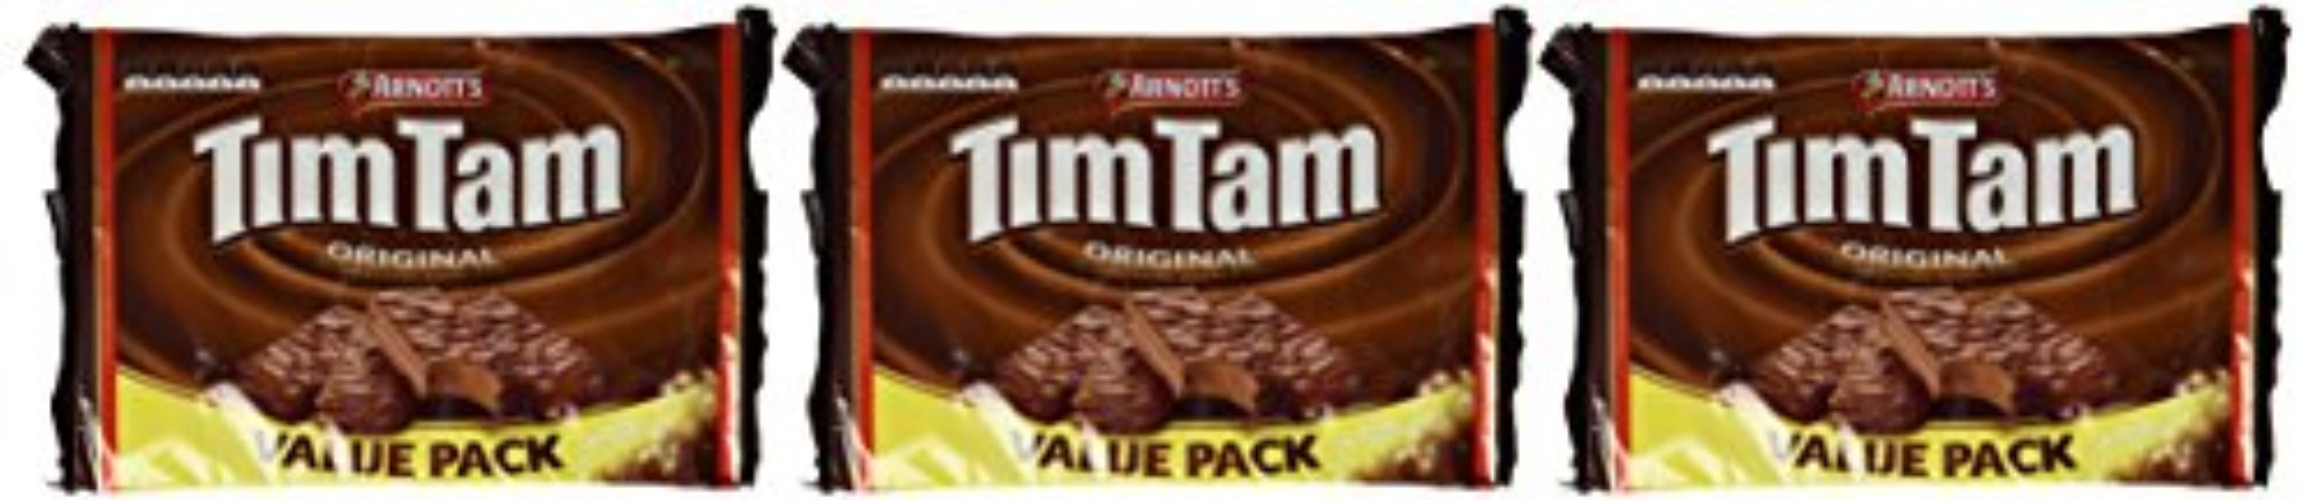 Arnotts Tim Tam Original 330g (Three Pack) (Made in Australia) - Chocolate - 11.64 Ounce (Pack of 3)